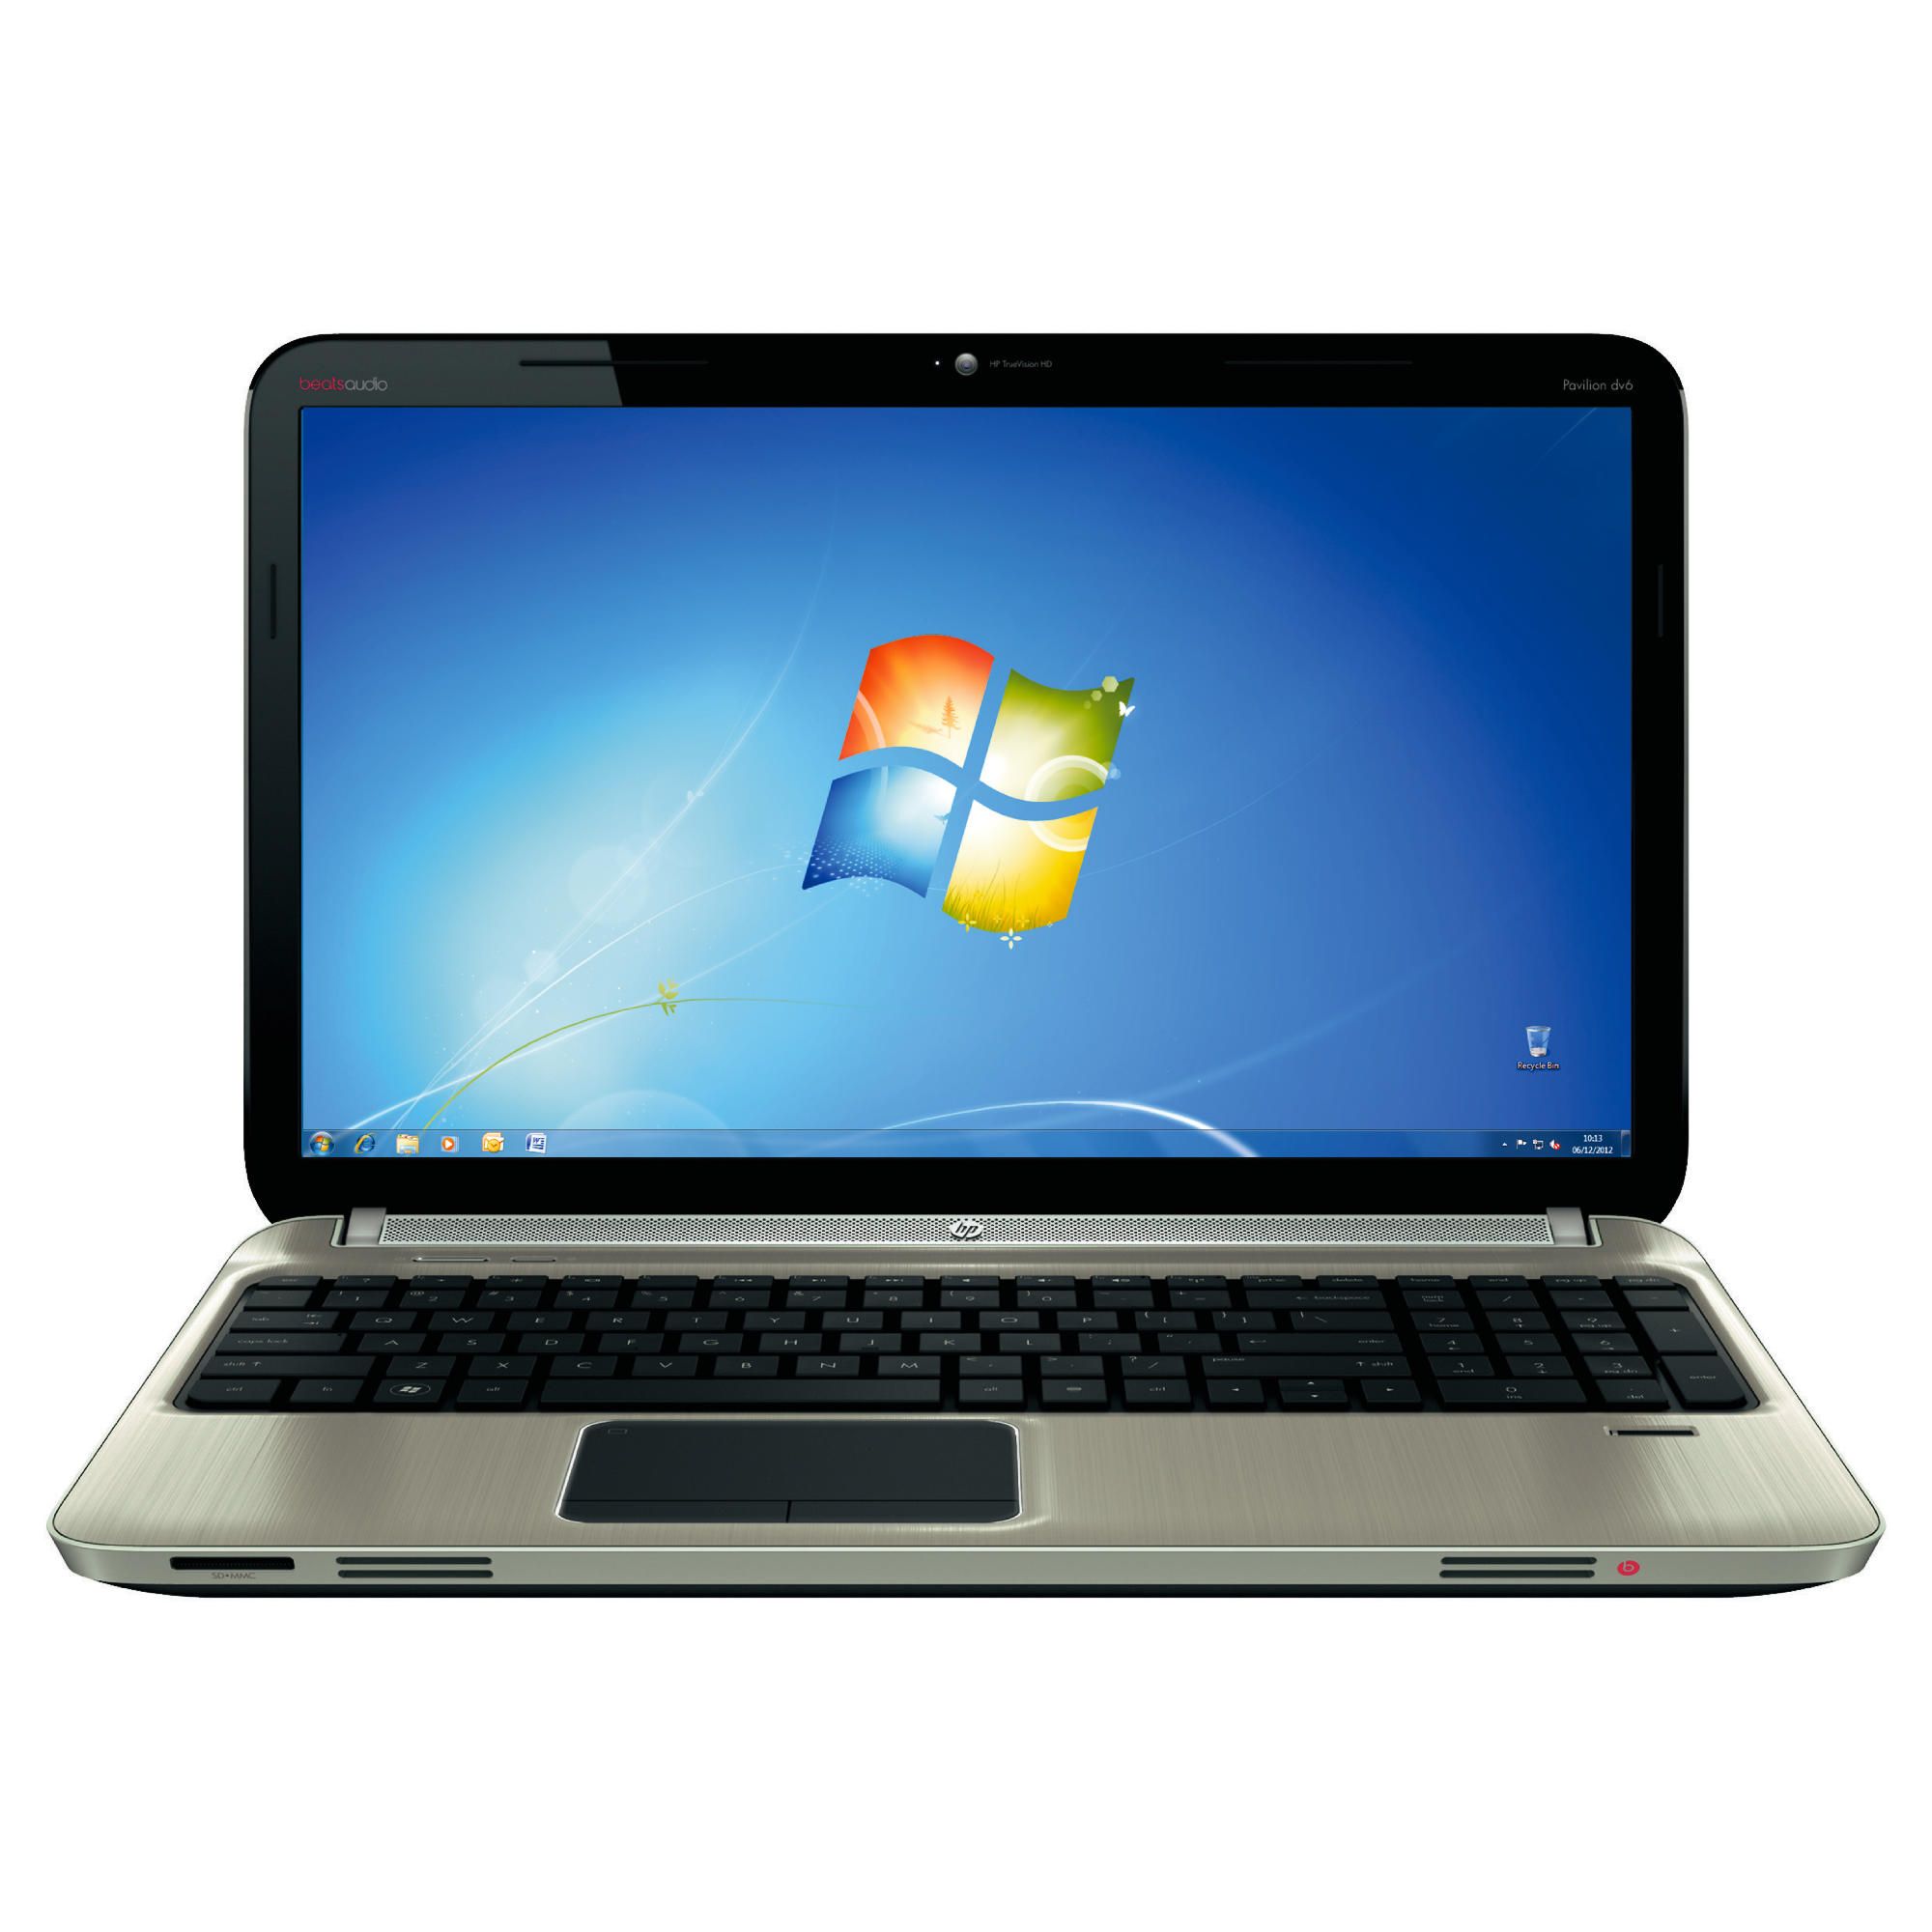 HP Pavilion dv6-6104ea Laptop (AMD A6, 8GB, 750GB, 15.6” Display)